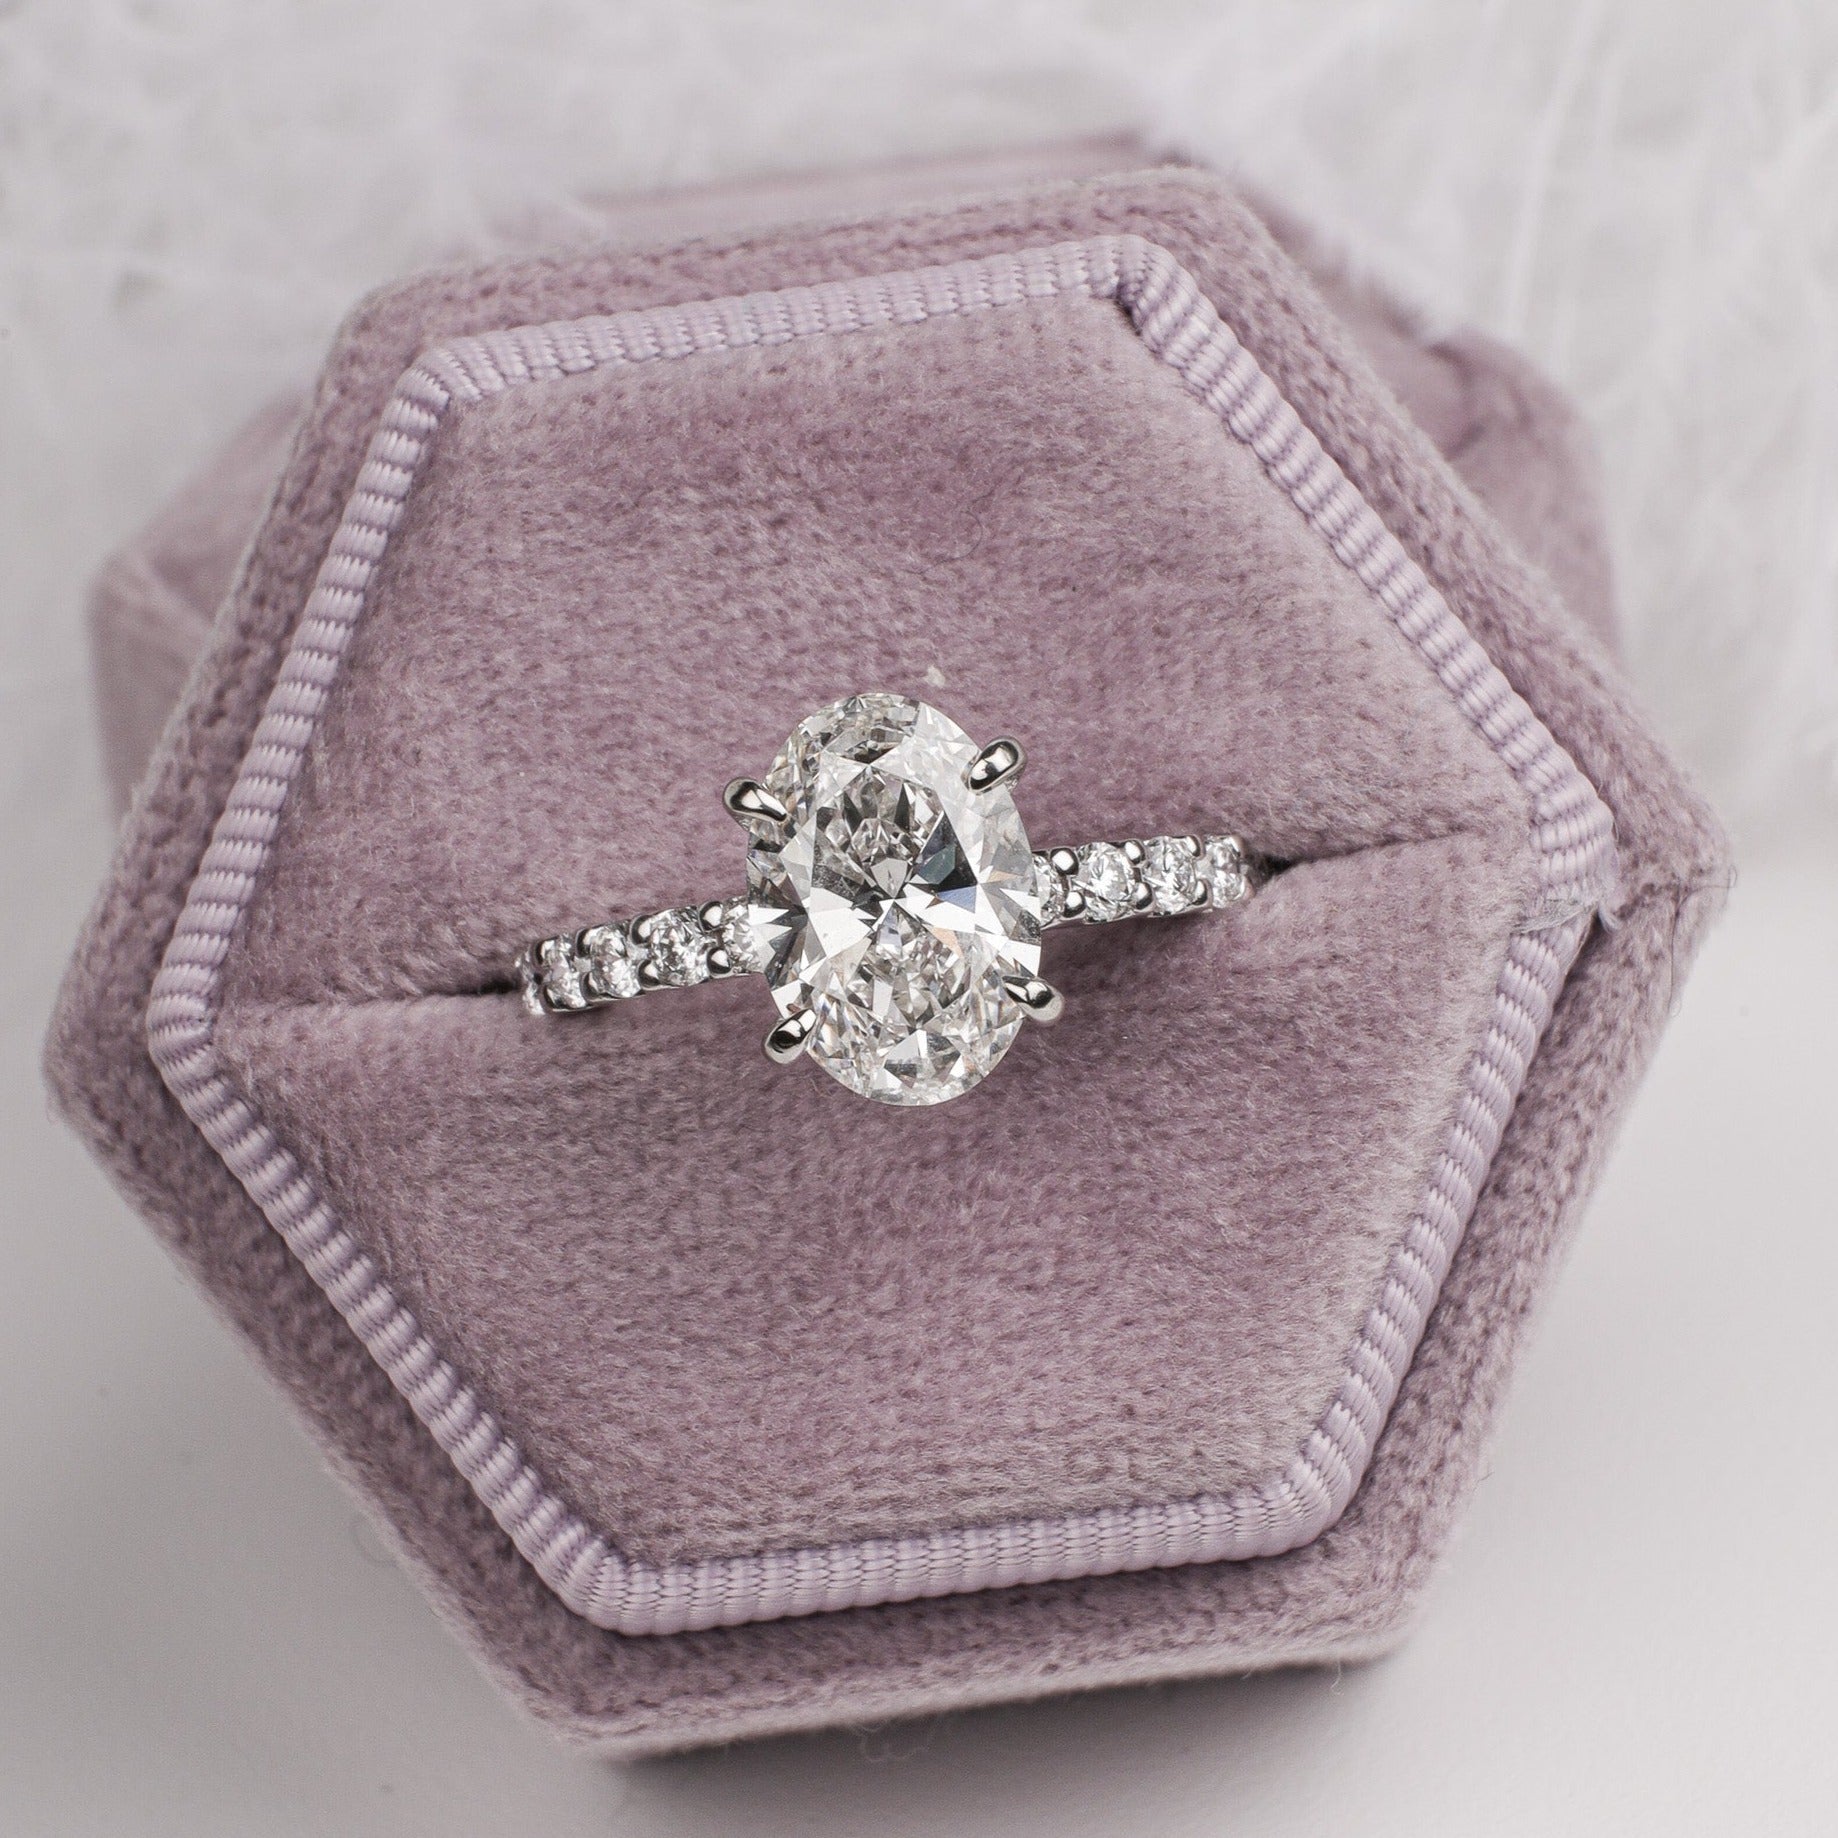 Engagement Ring 3 Carat Oval Cut Lab Diamond Pave